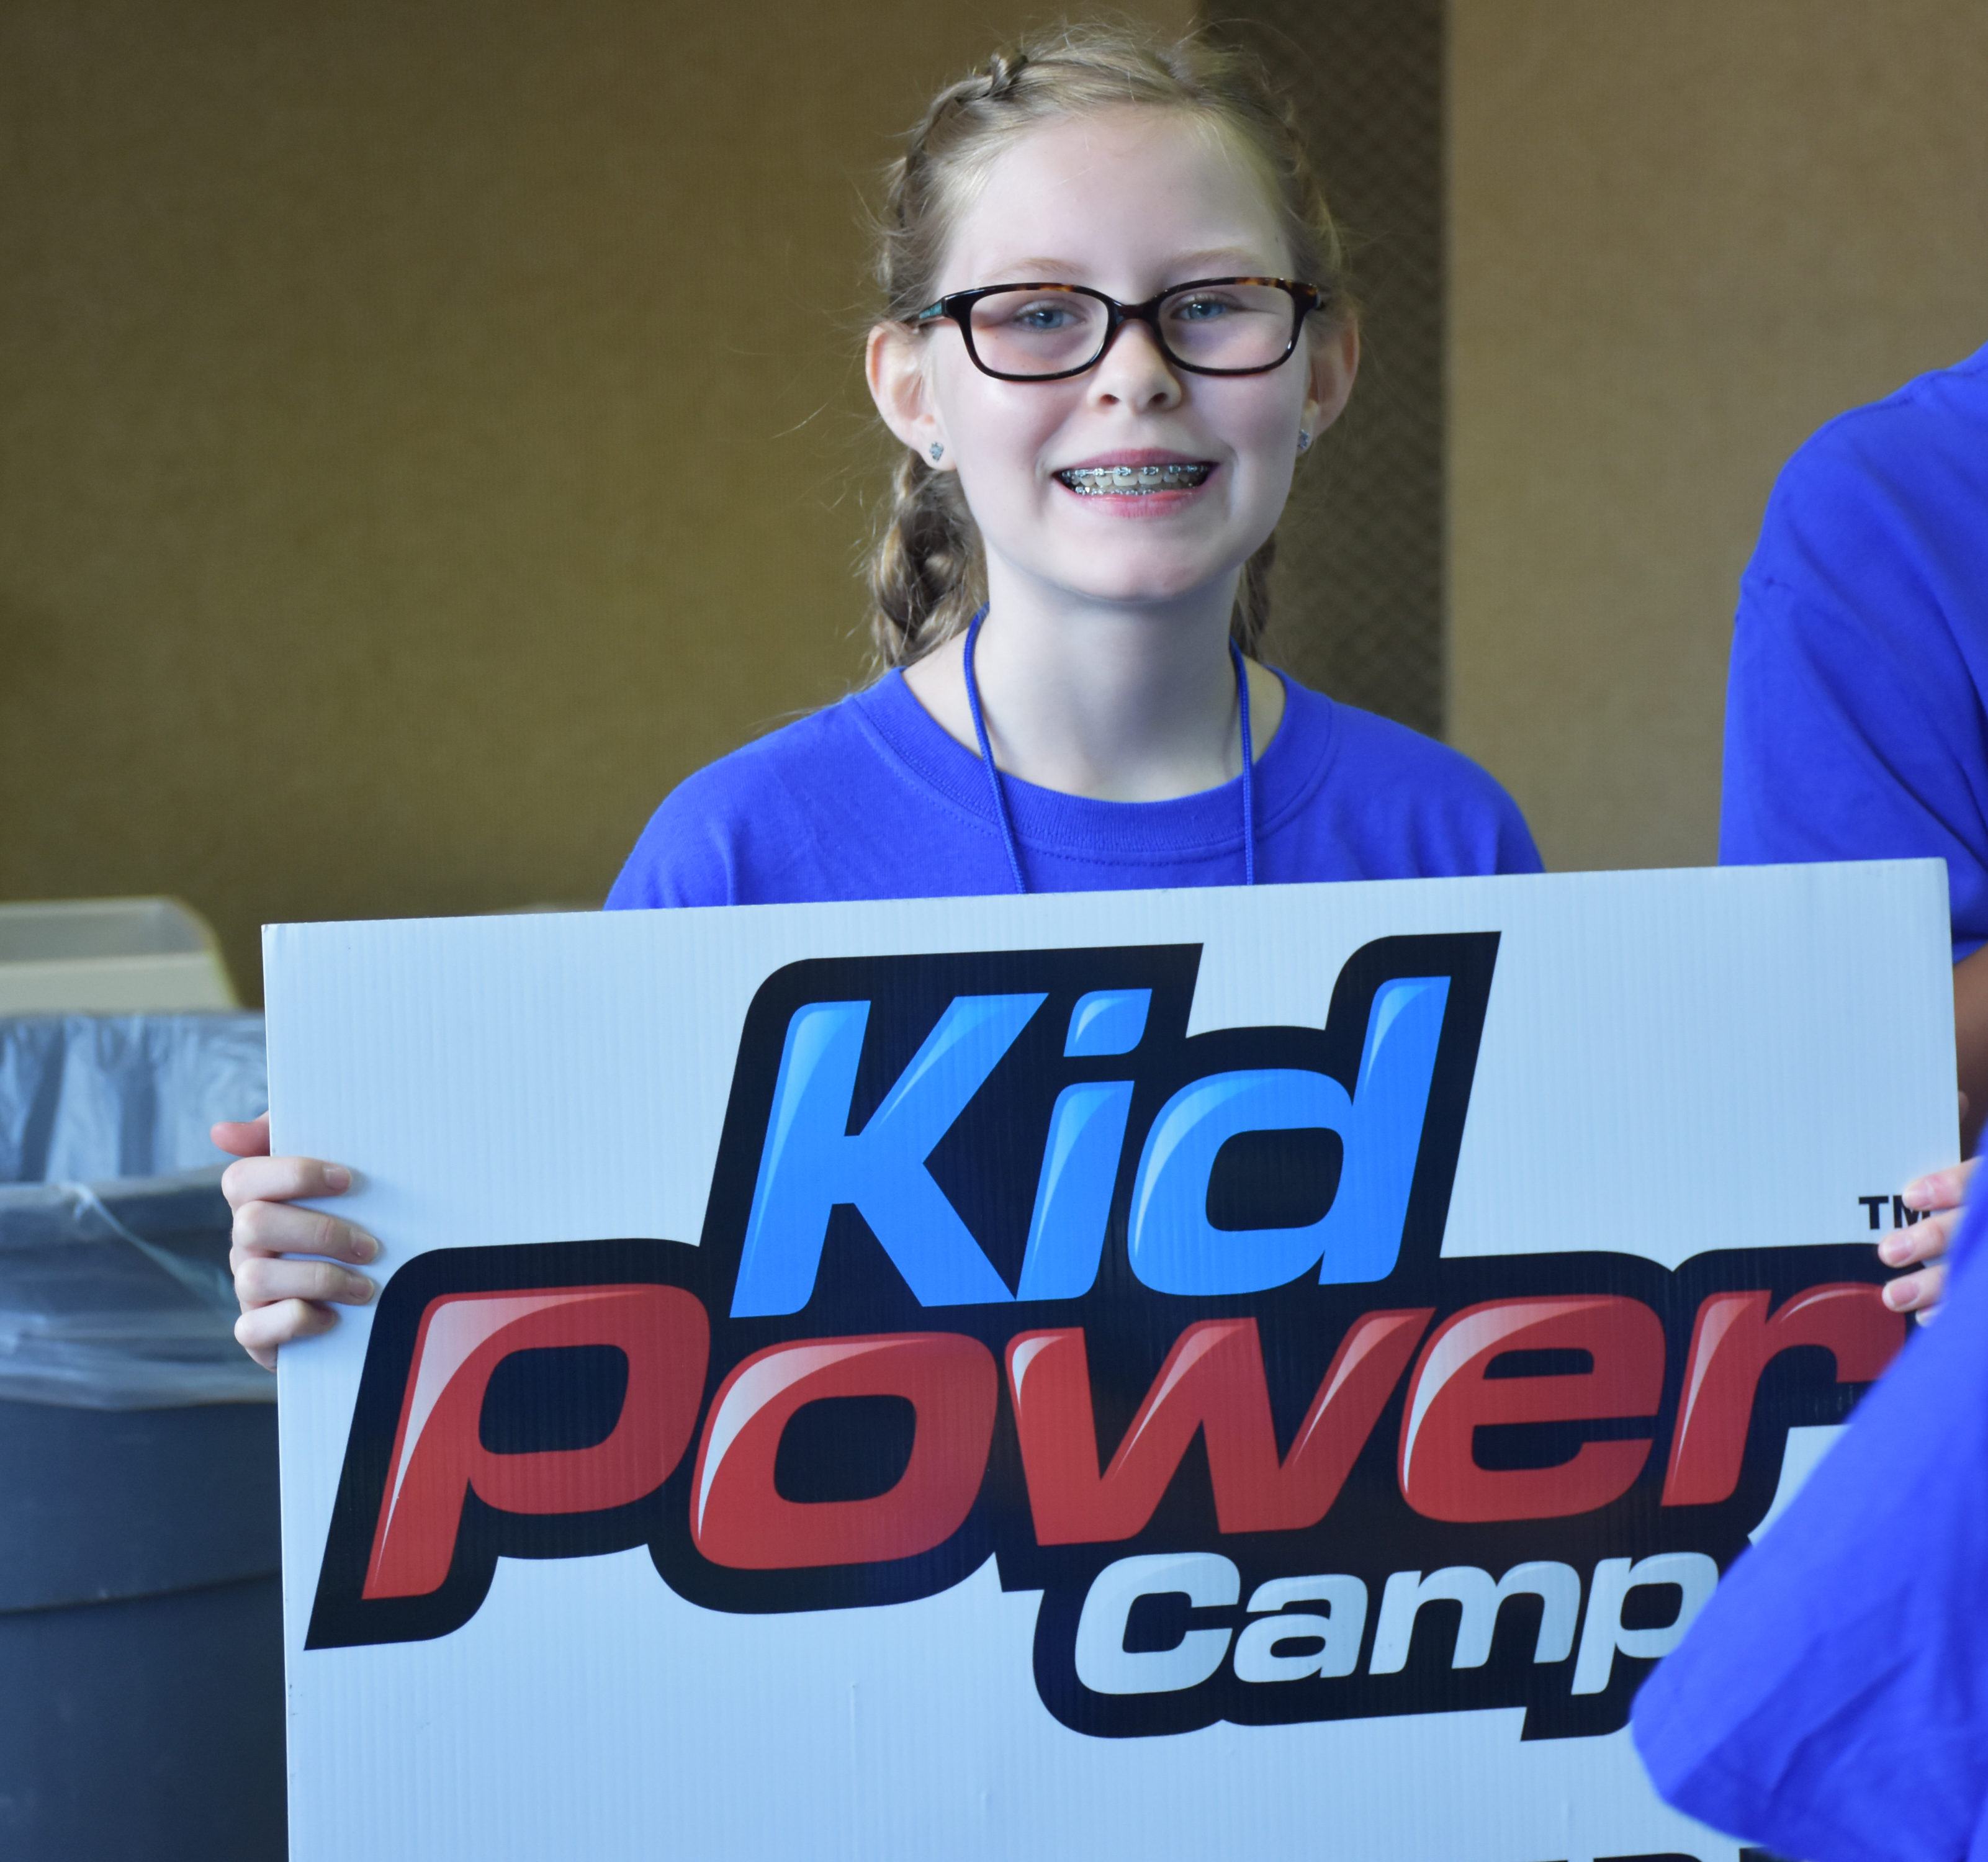 Kid Power Camp